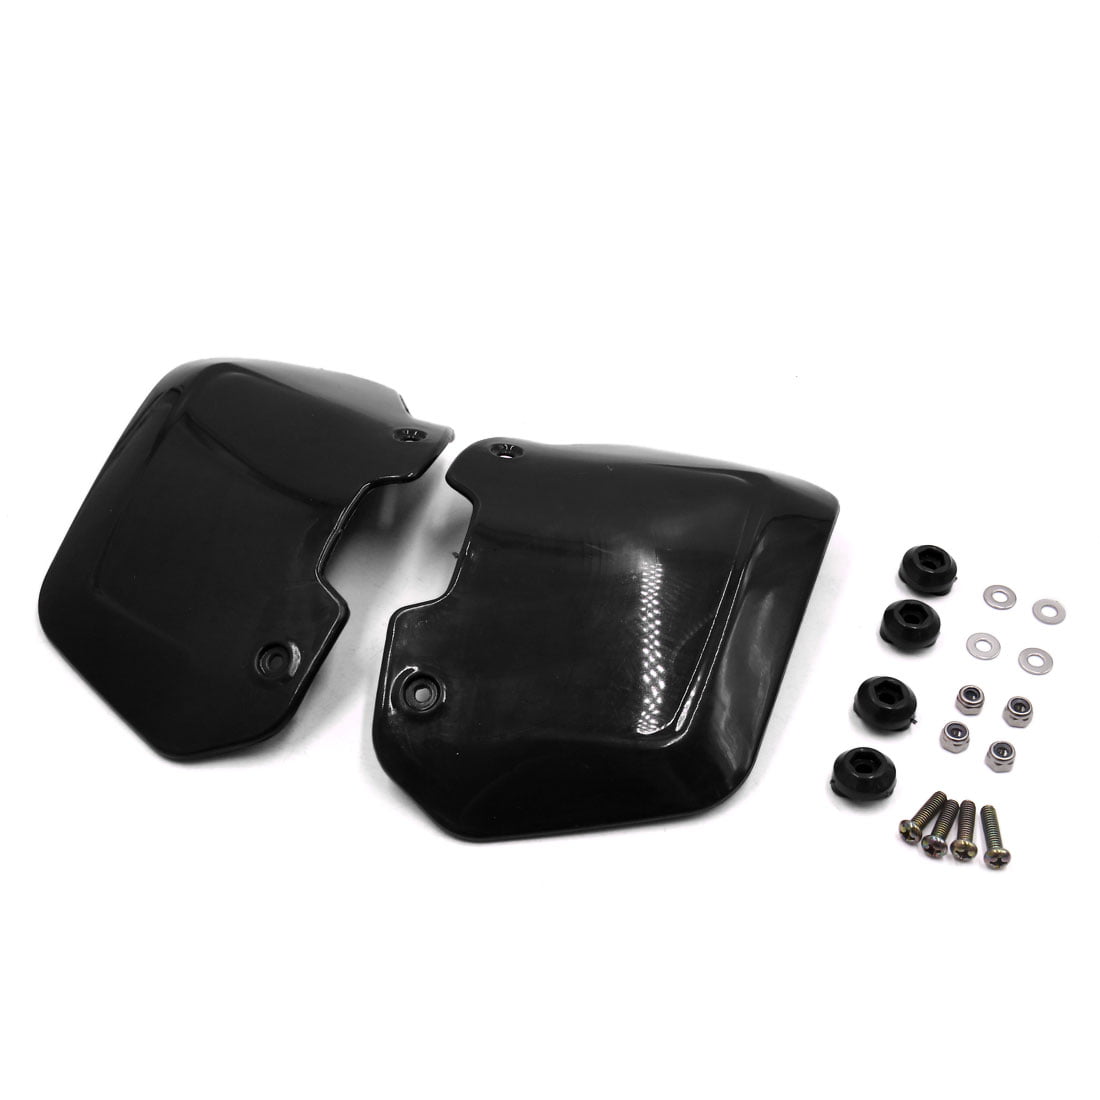 Pair Black Motorcycle Hand Guard Handguard Wind Protector Deflector Shield